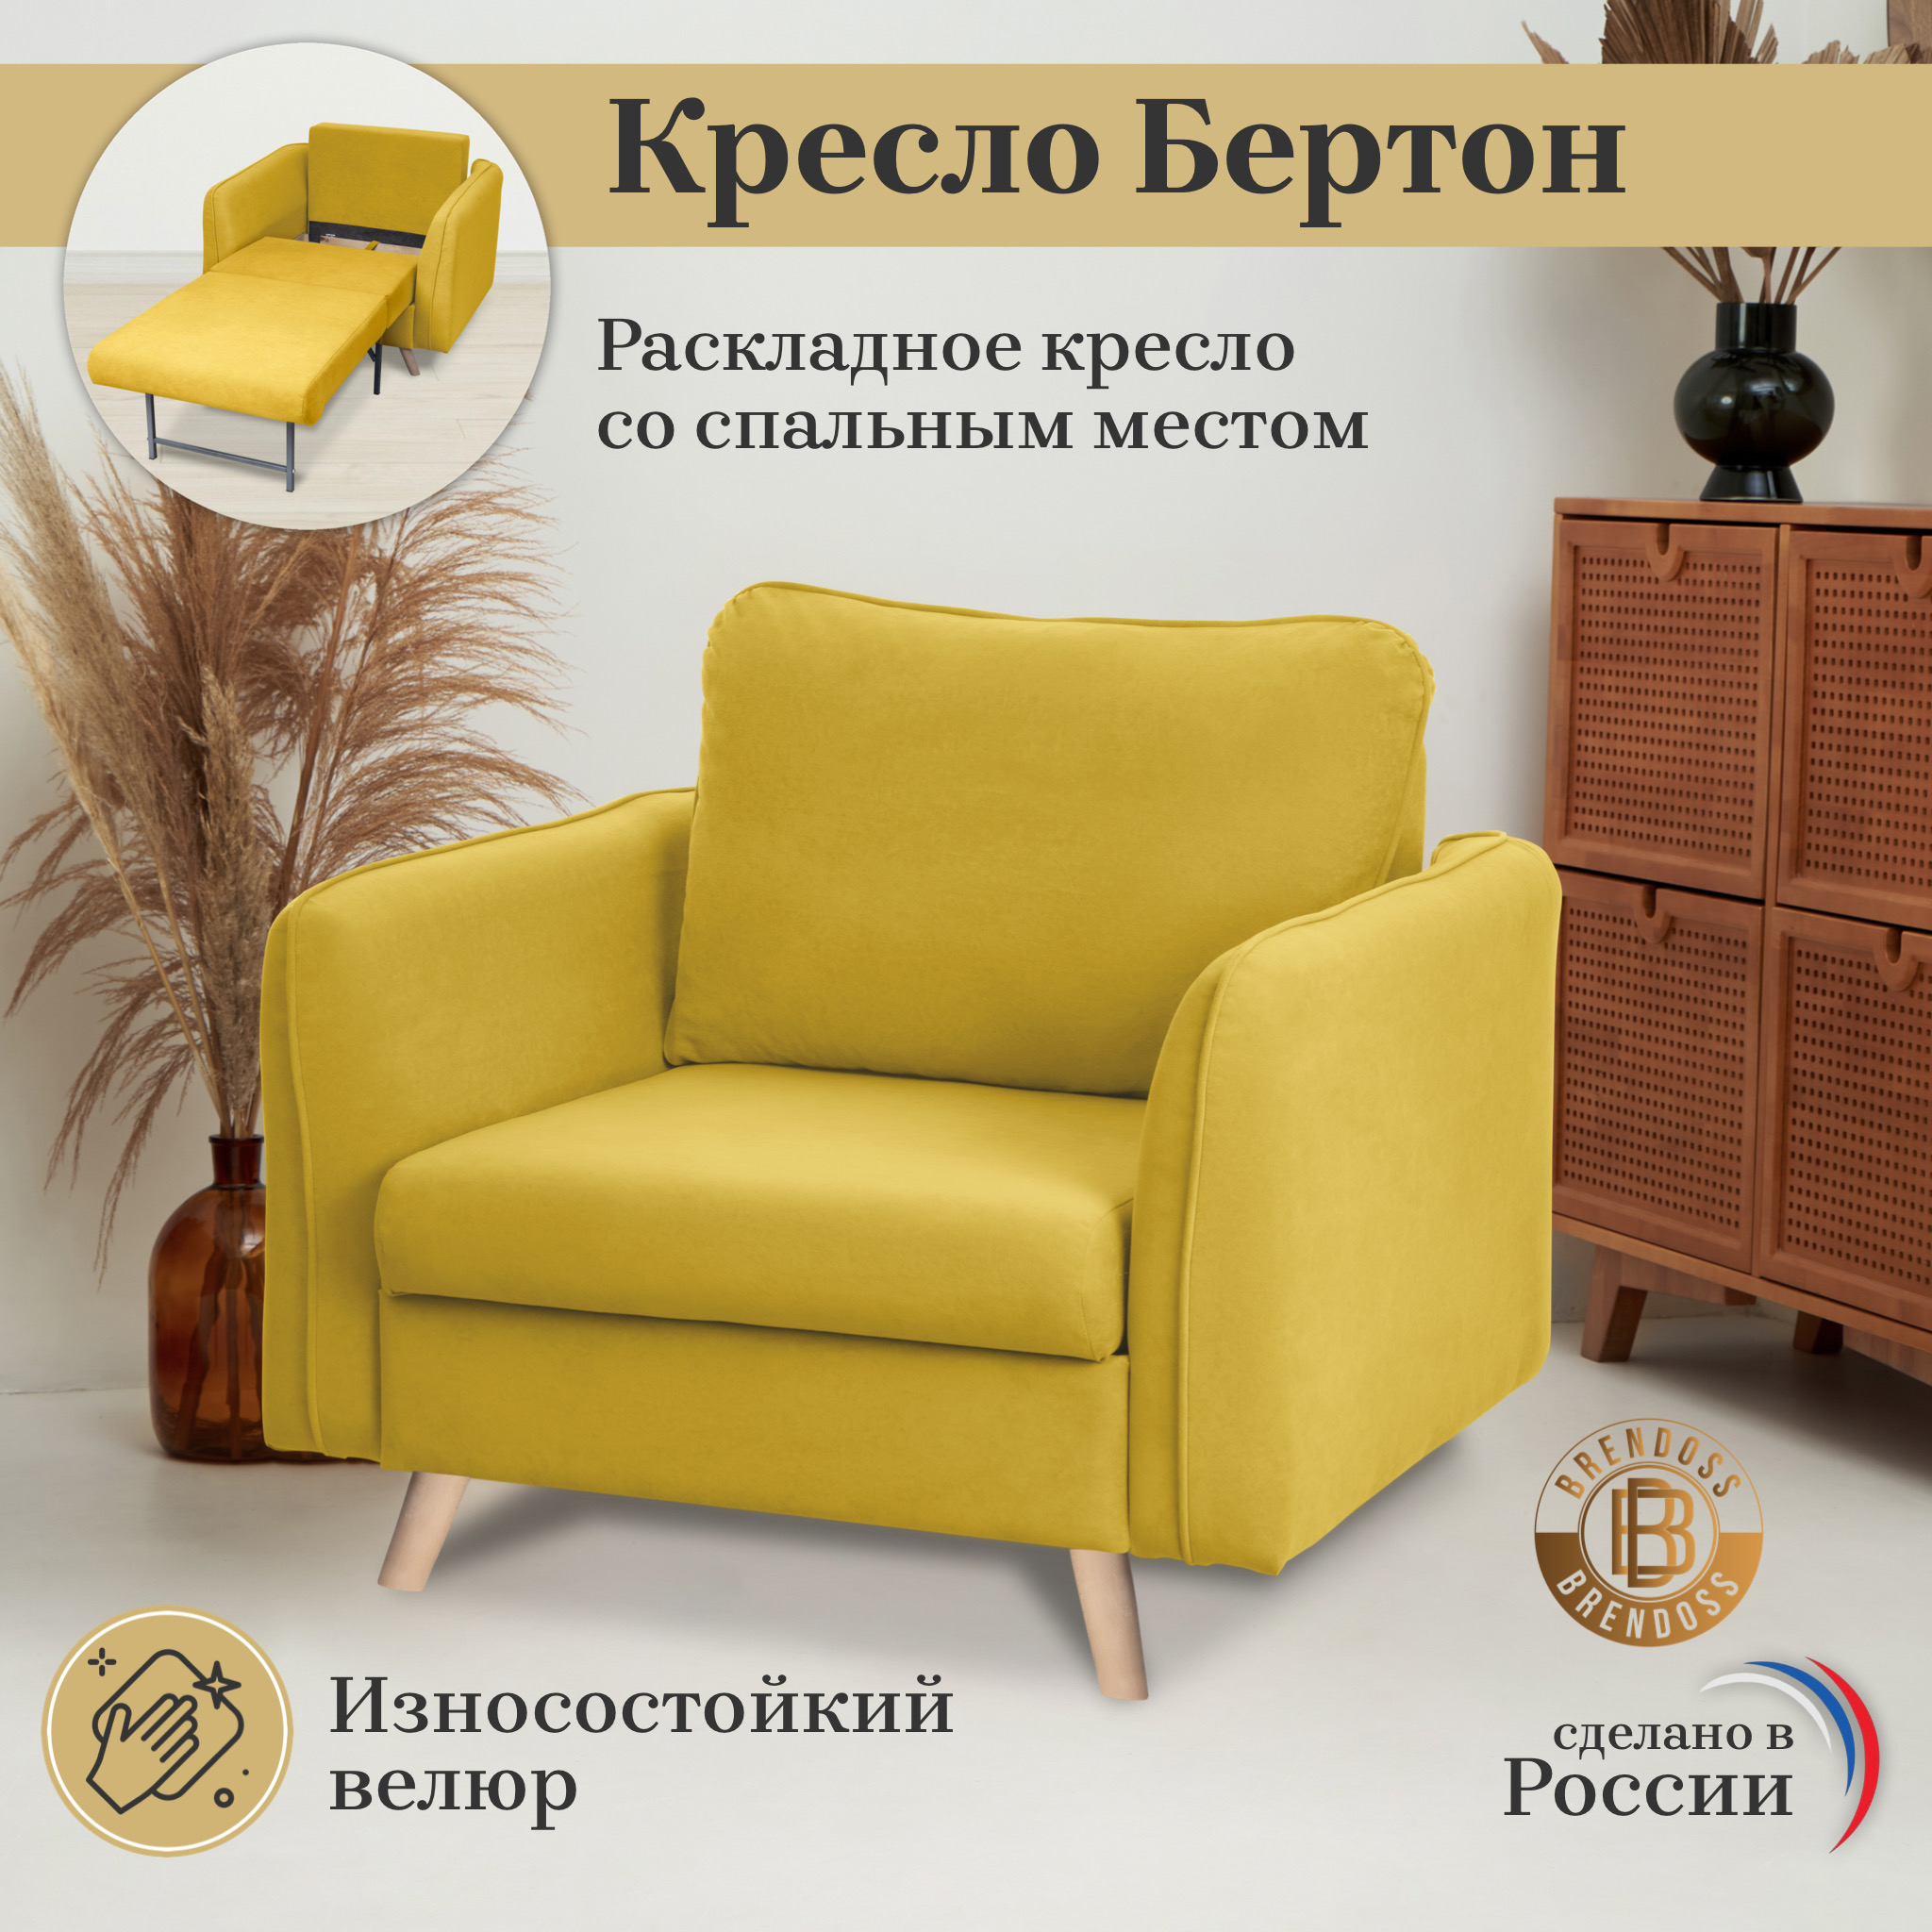 Кресло-кровать Brendoss Бертон, желтый